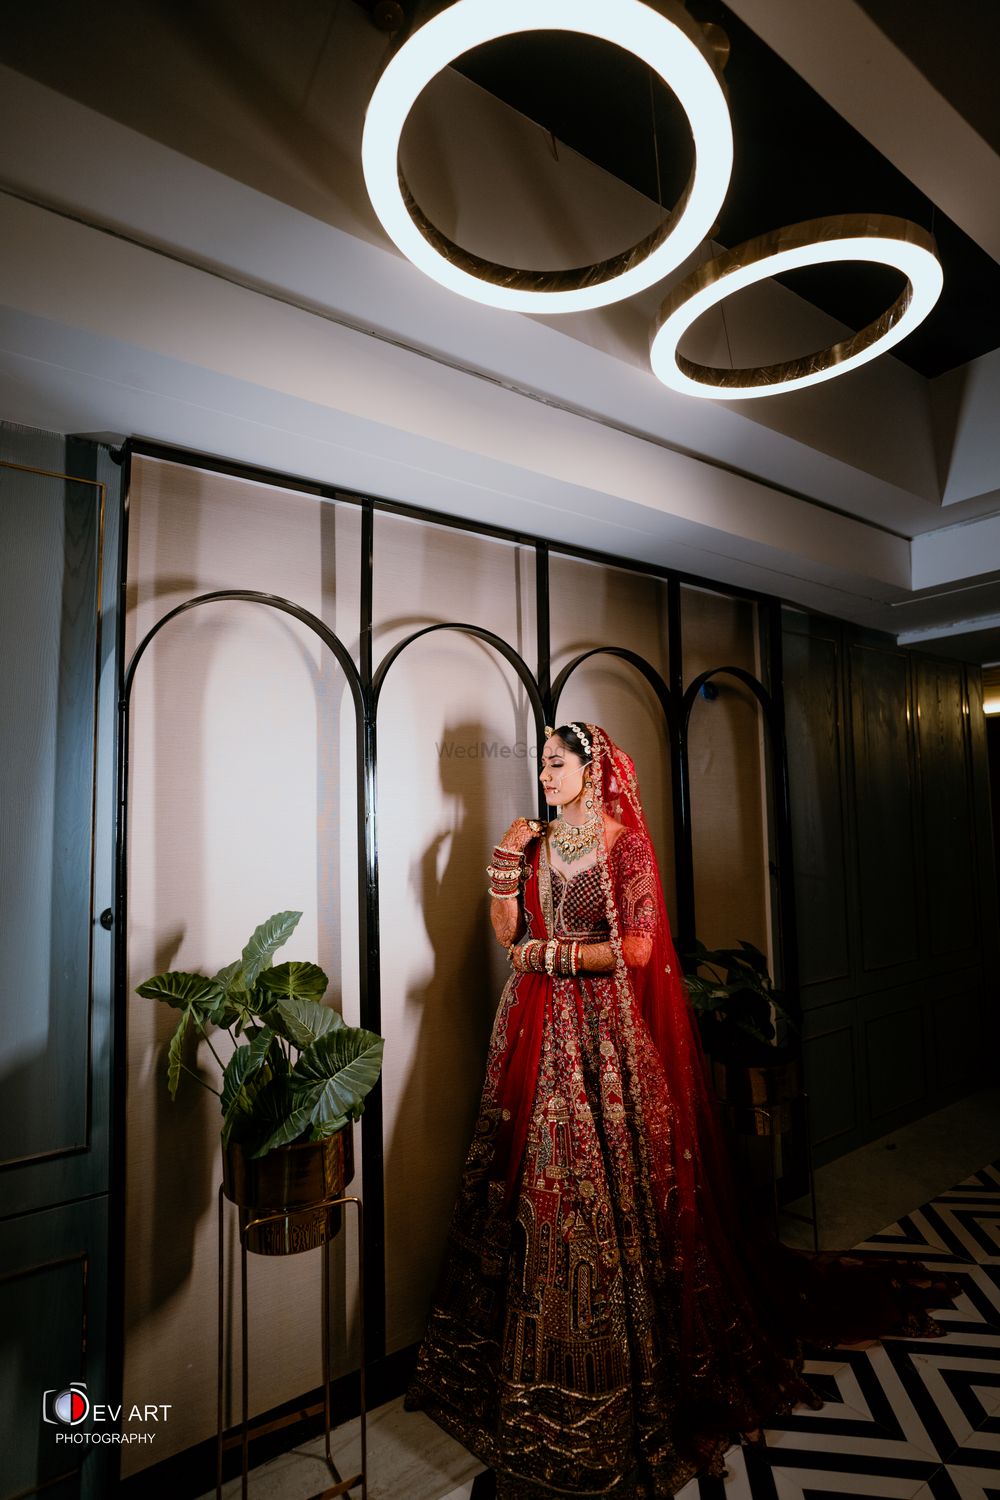 Photo From Kriti + Vikas ( Wedding ) - By Dev Art Photography